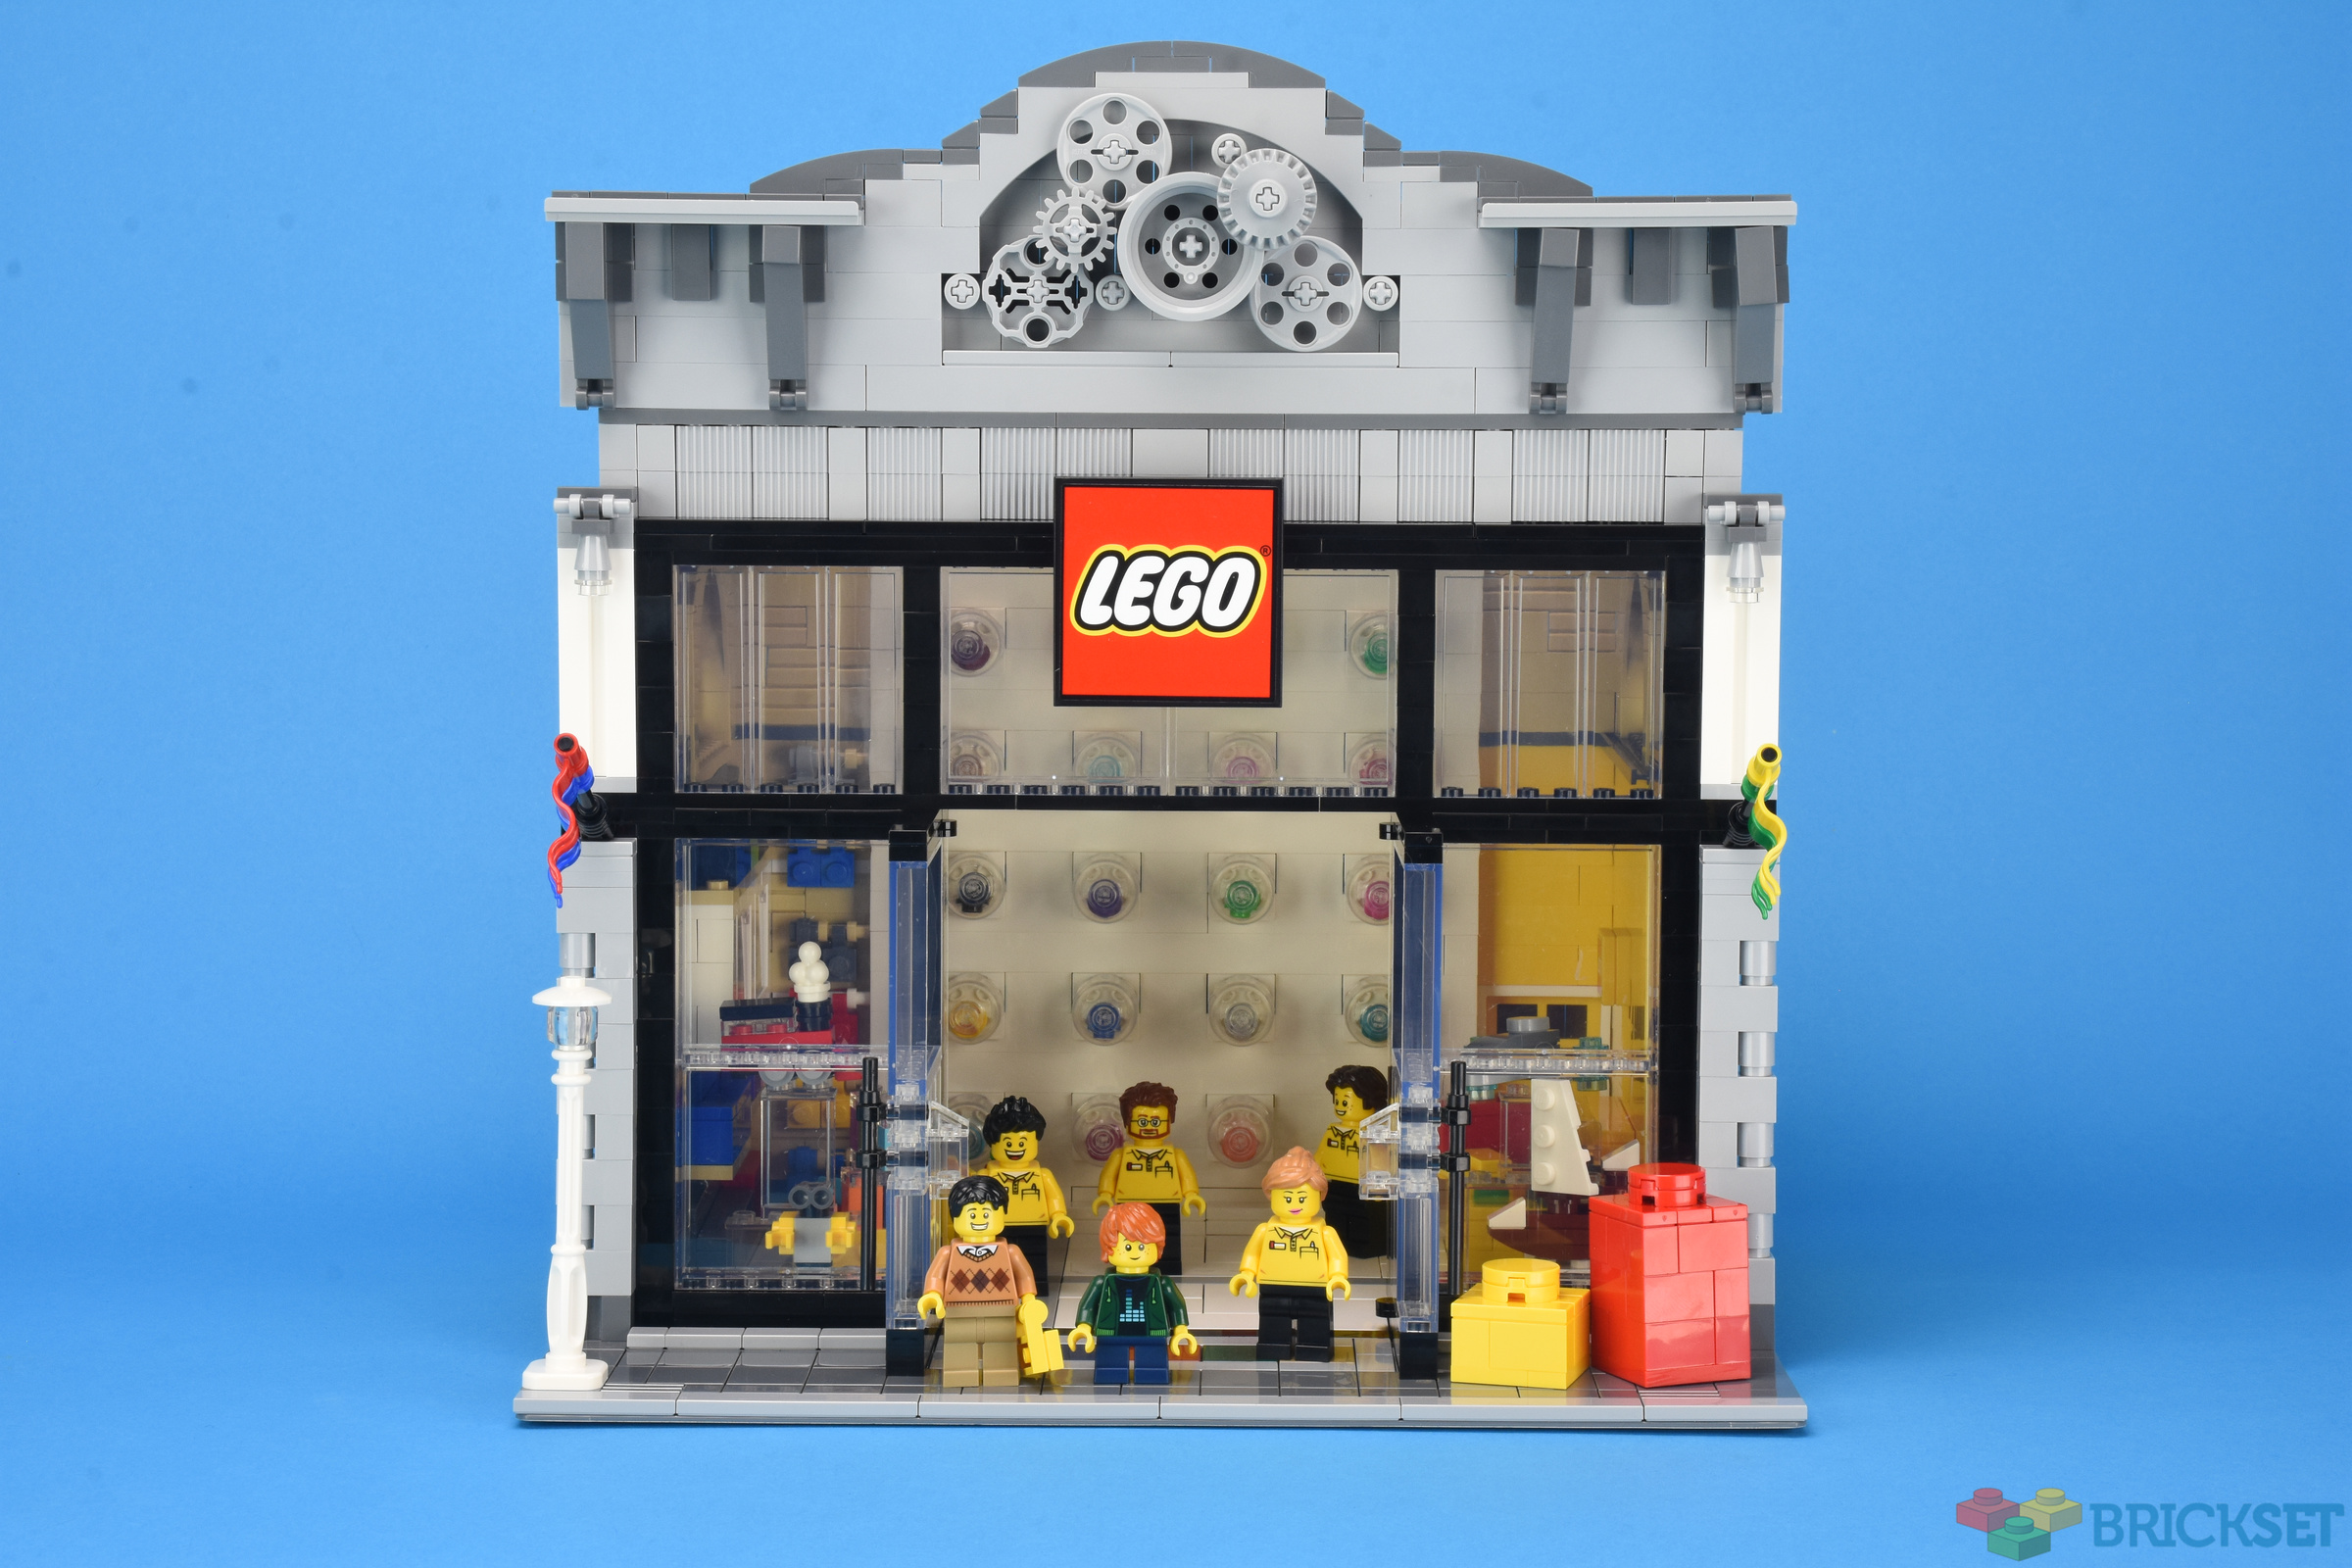 LEGO 910009 Modular LEGO Store review